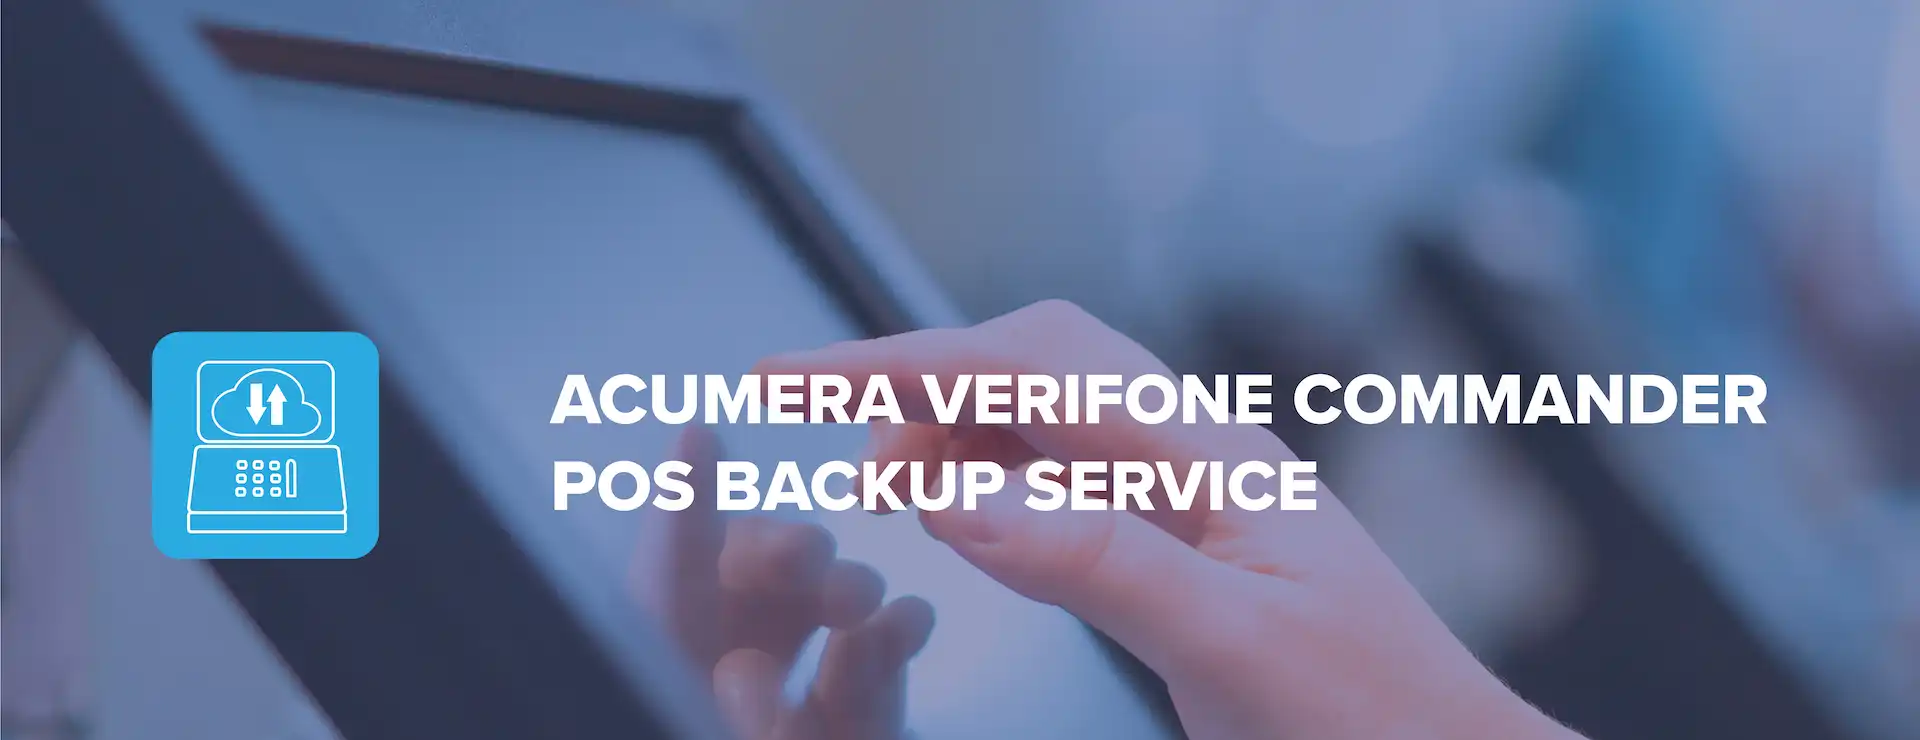 Acumera Verifone Commander POS Backup Service